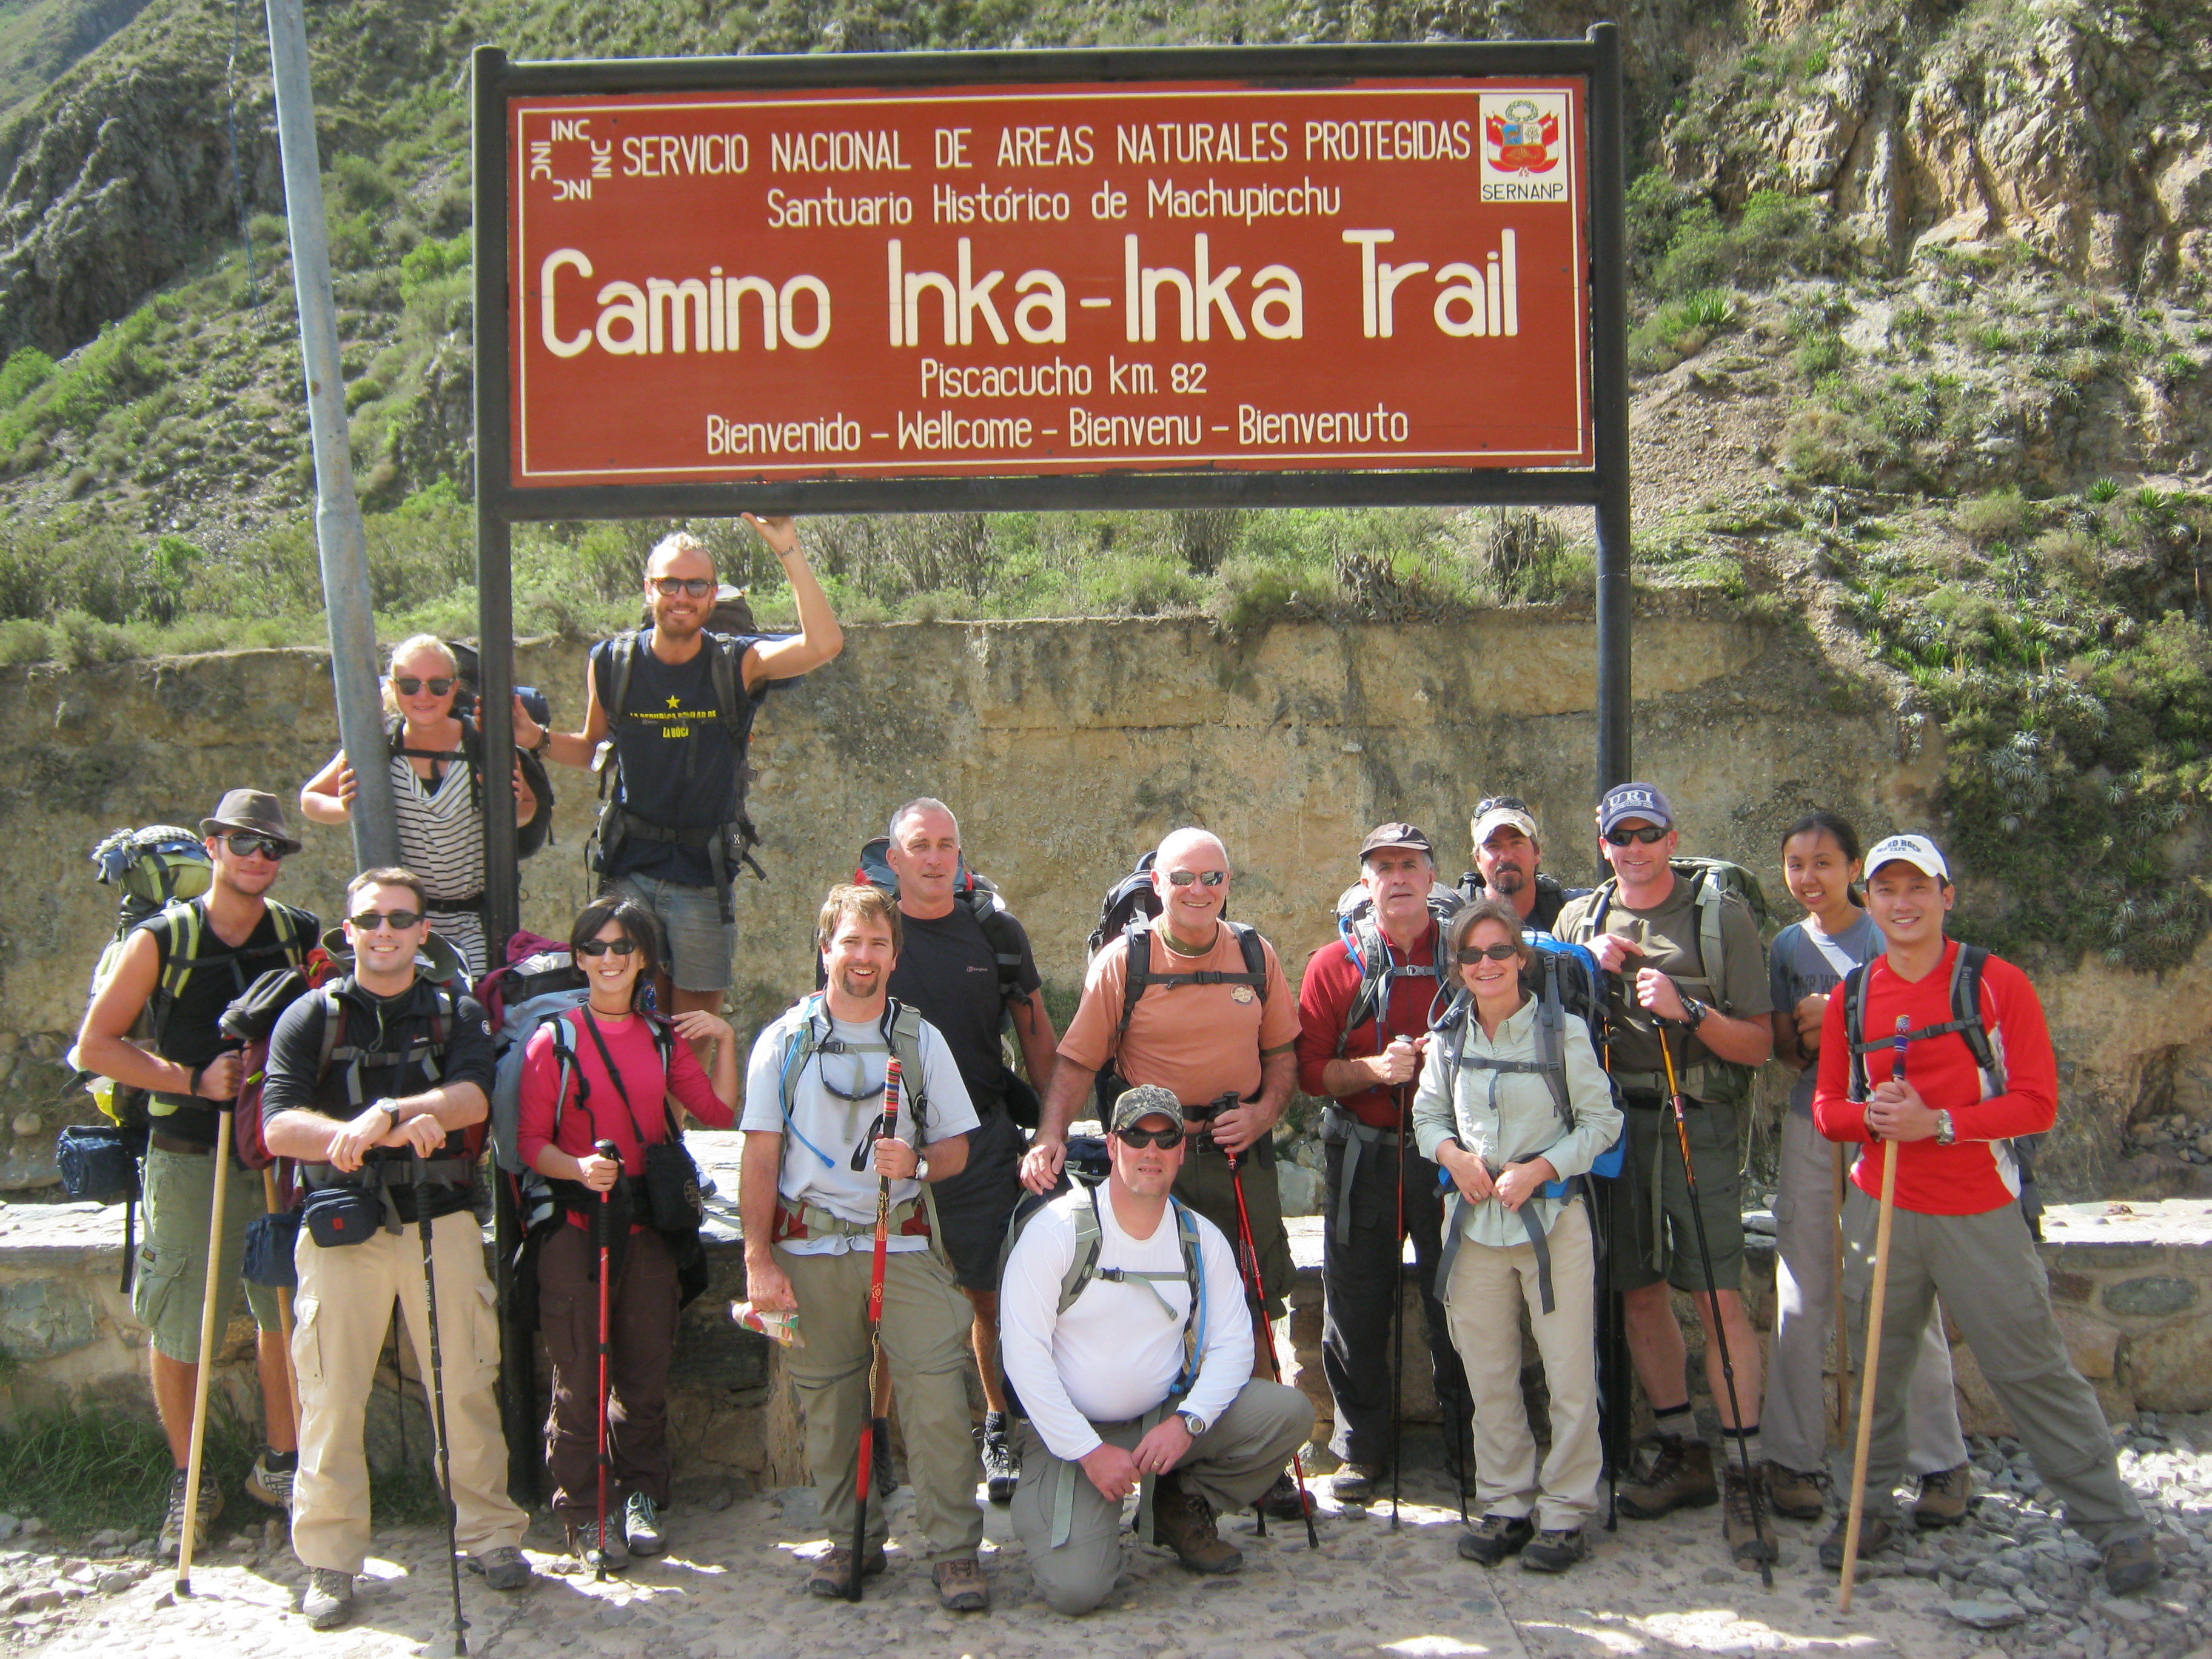 DeRisk IT Hiking the Inca Trail